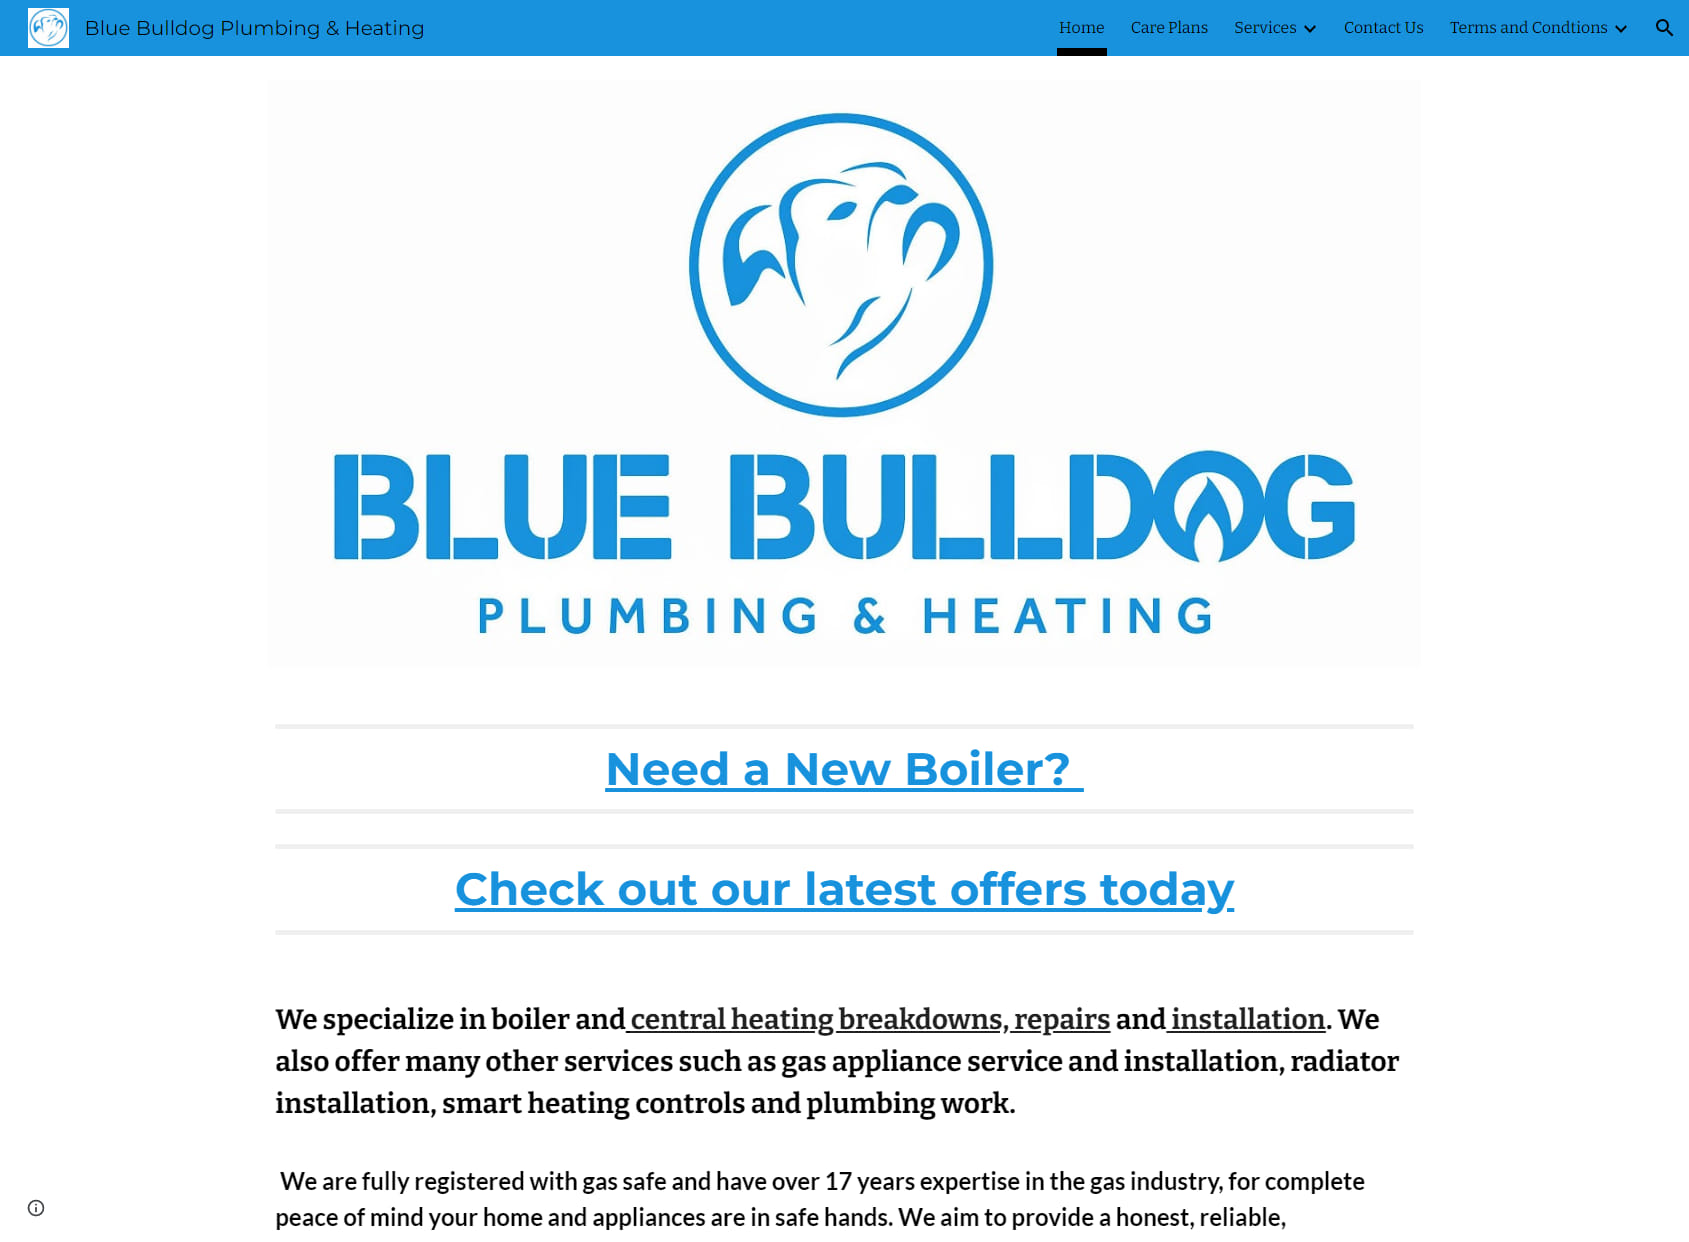 Blue Bulldog Ltd Plumbing and Heating